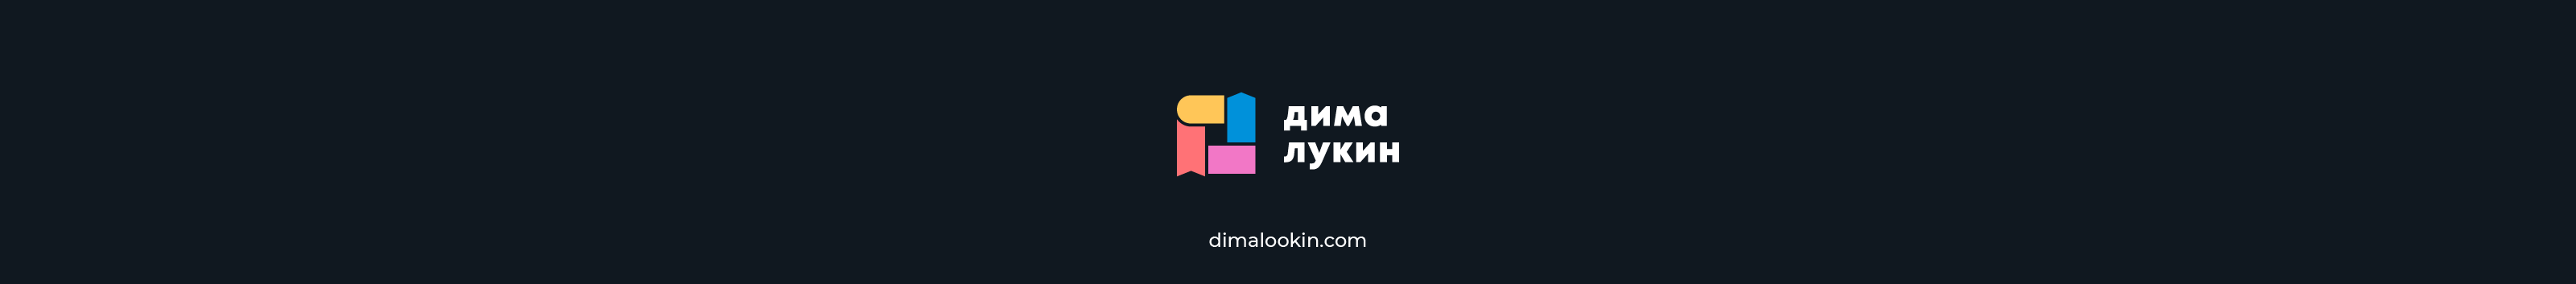 Дима Lookin's profile banner